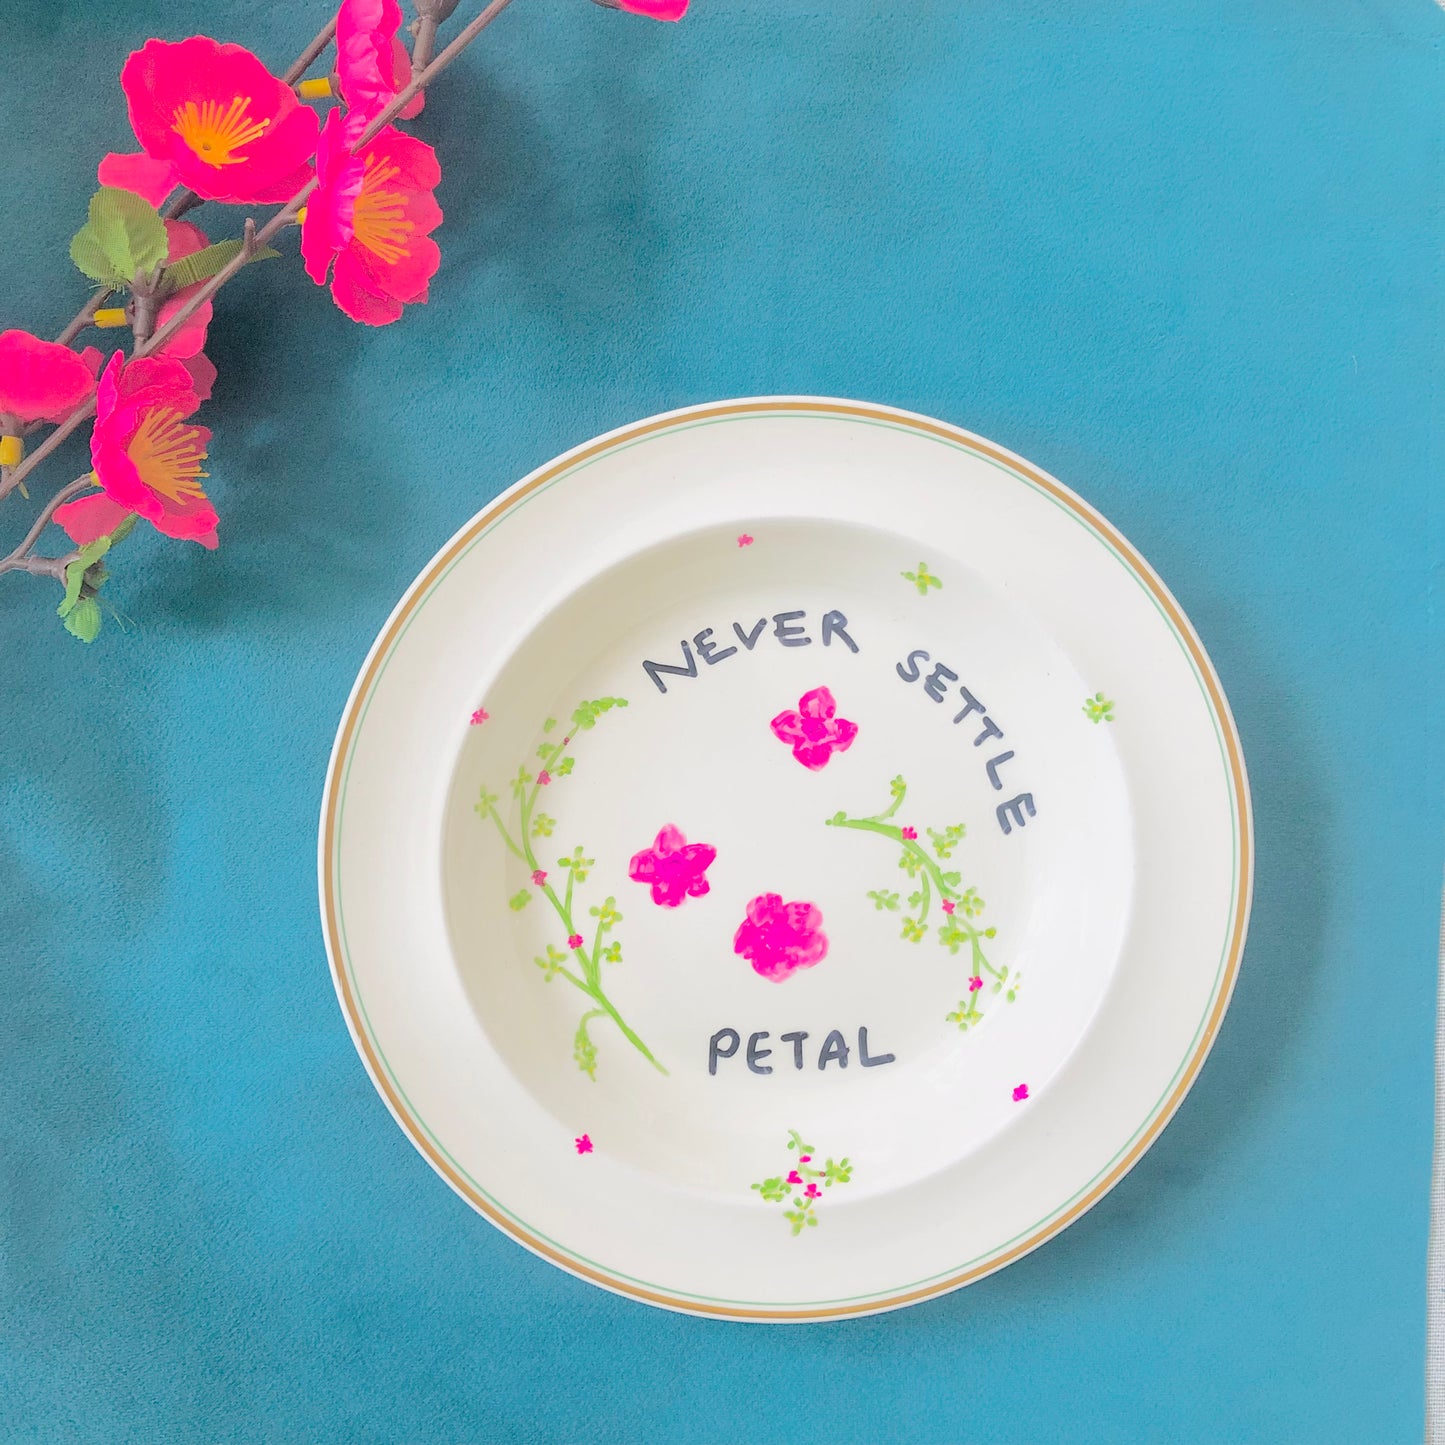 “Never Settle Petal” Vintage Plate